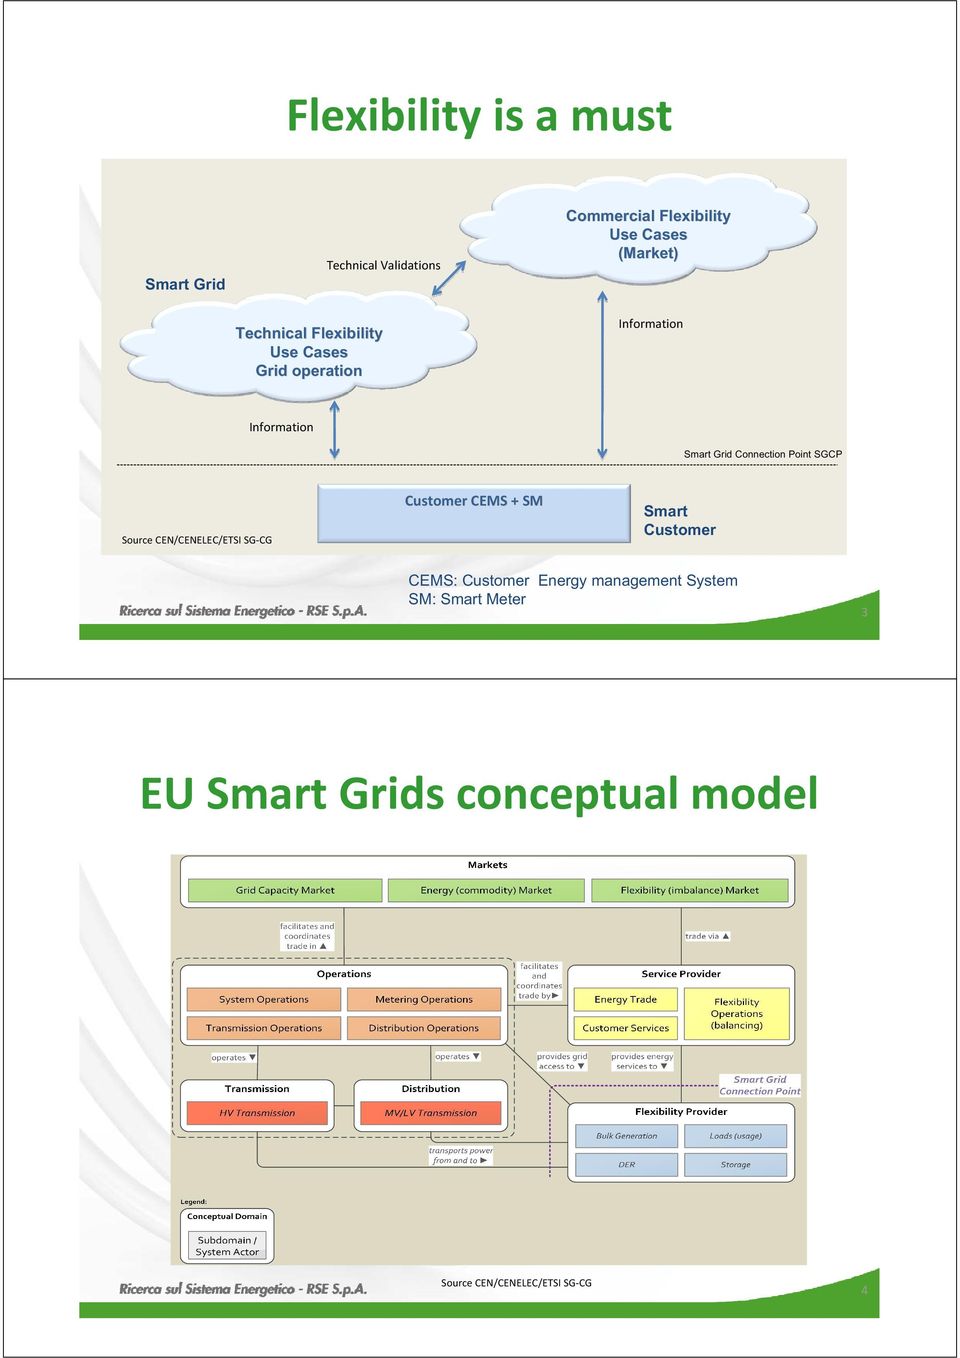 Point SGCP SourceCEN/CENELEC/ETSISGCG CustomerCEMS+SM Smart Customer CEMS: Customer Energy